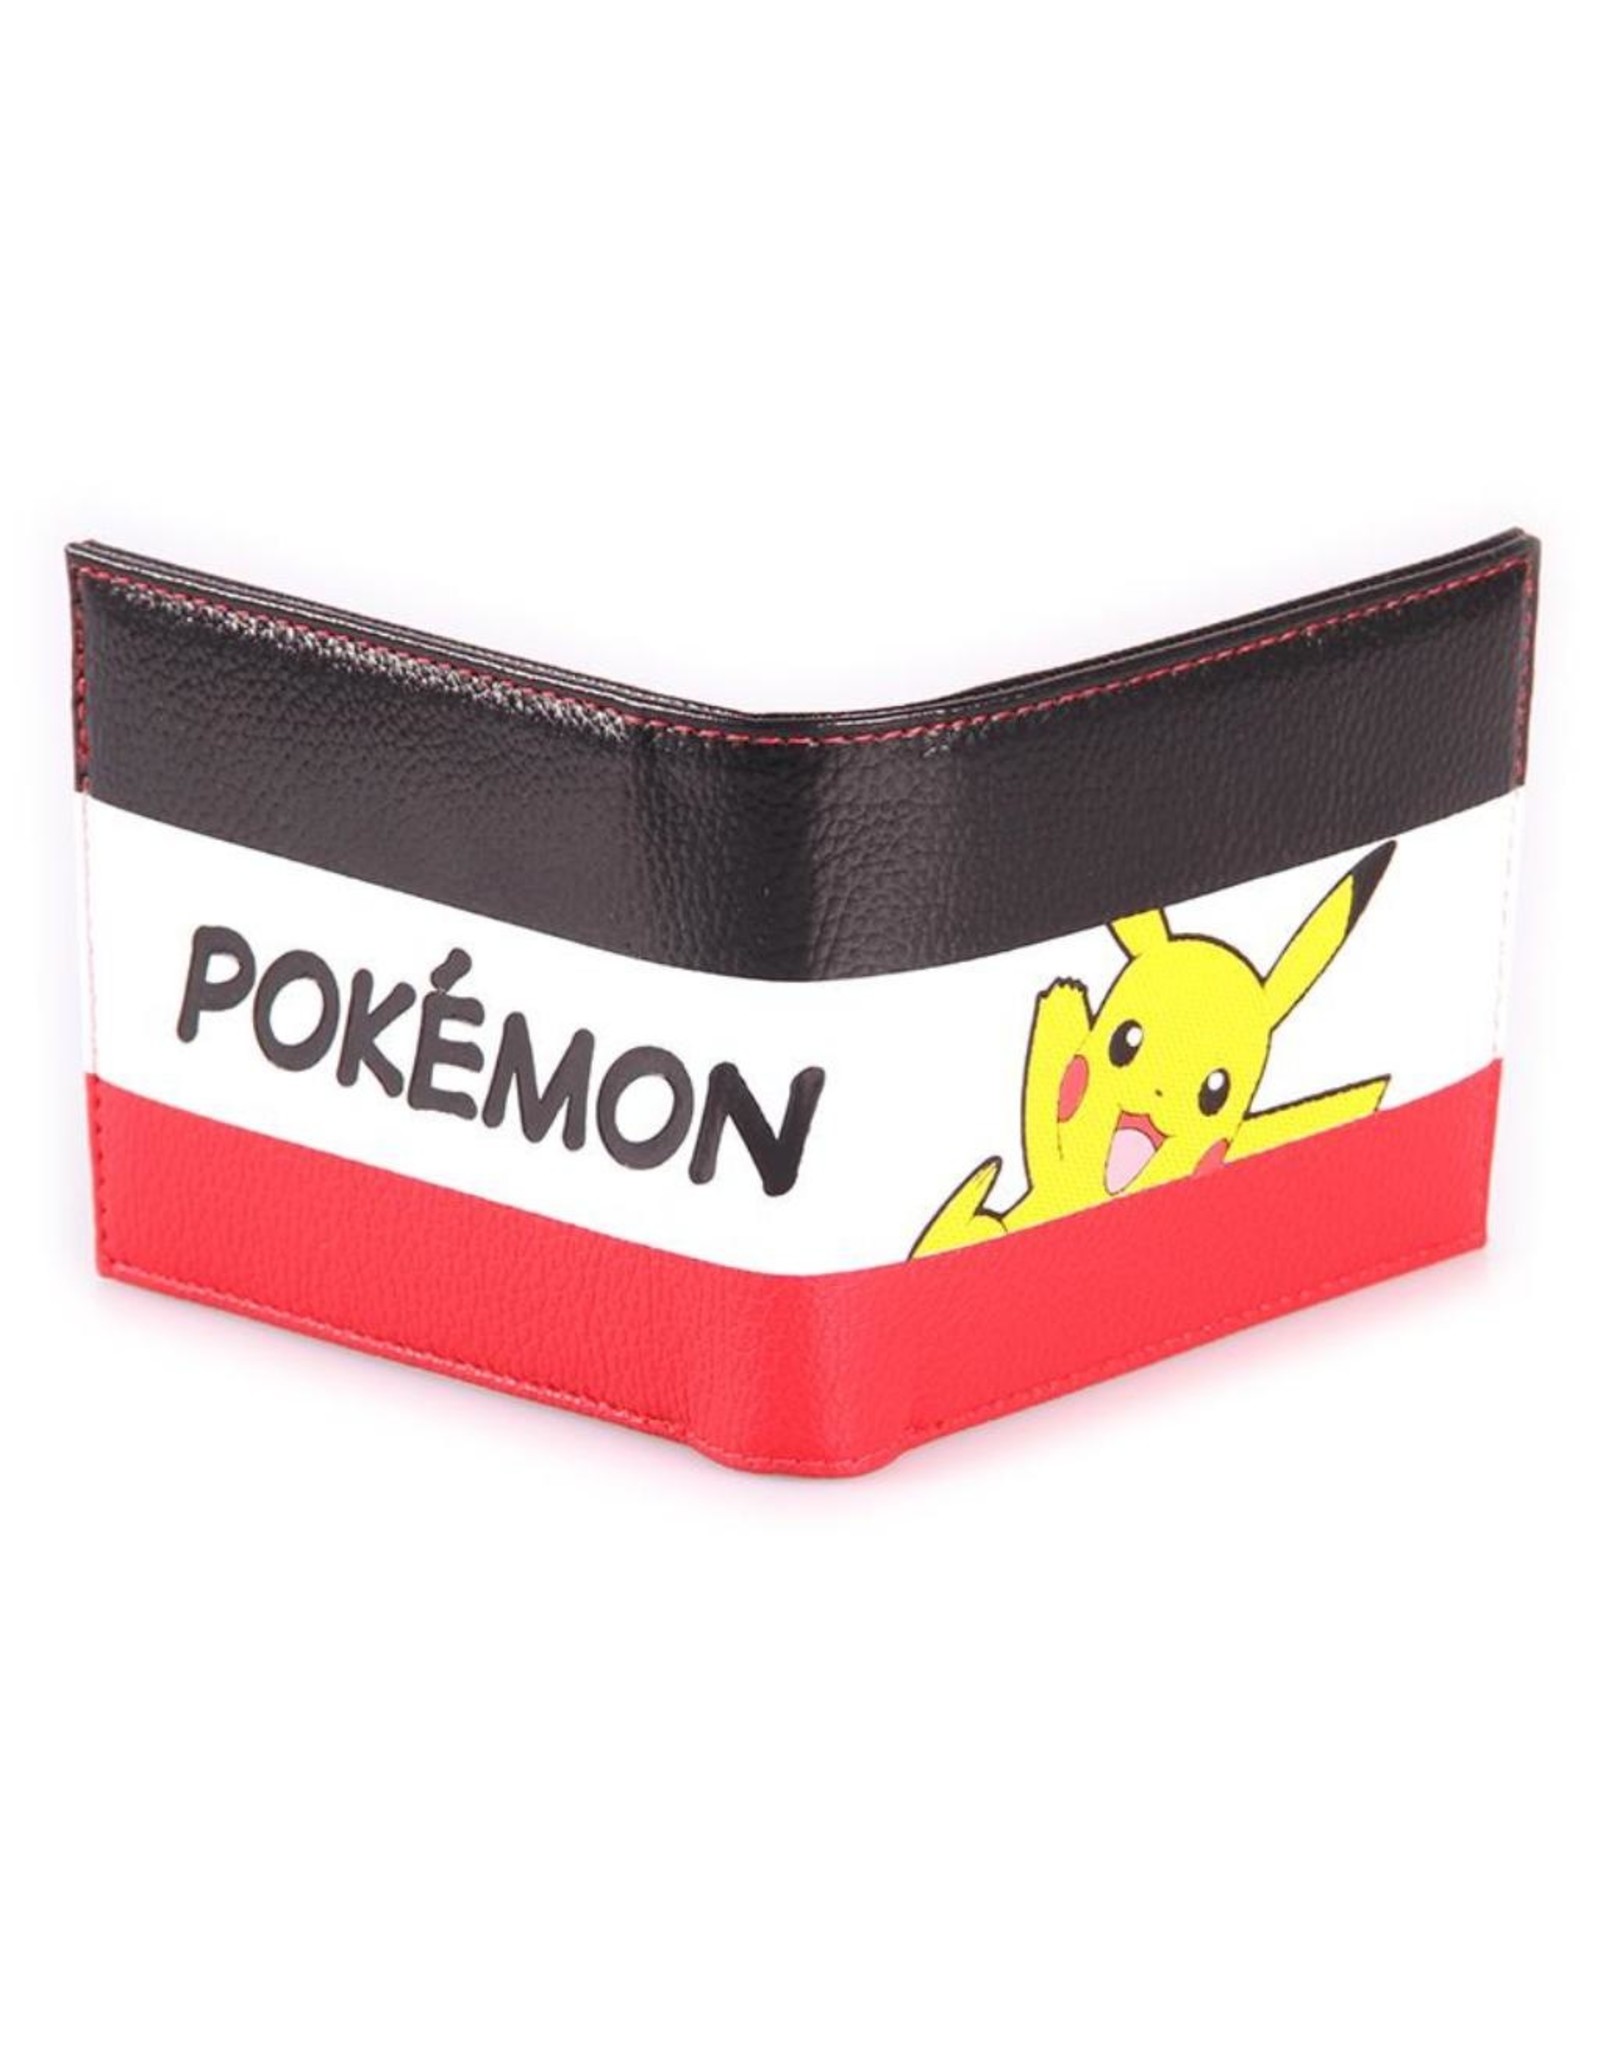 Nintendo Merchandise wallets - Nintendo Pokémon Pikachu wallet